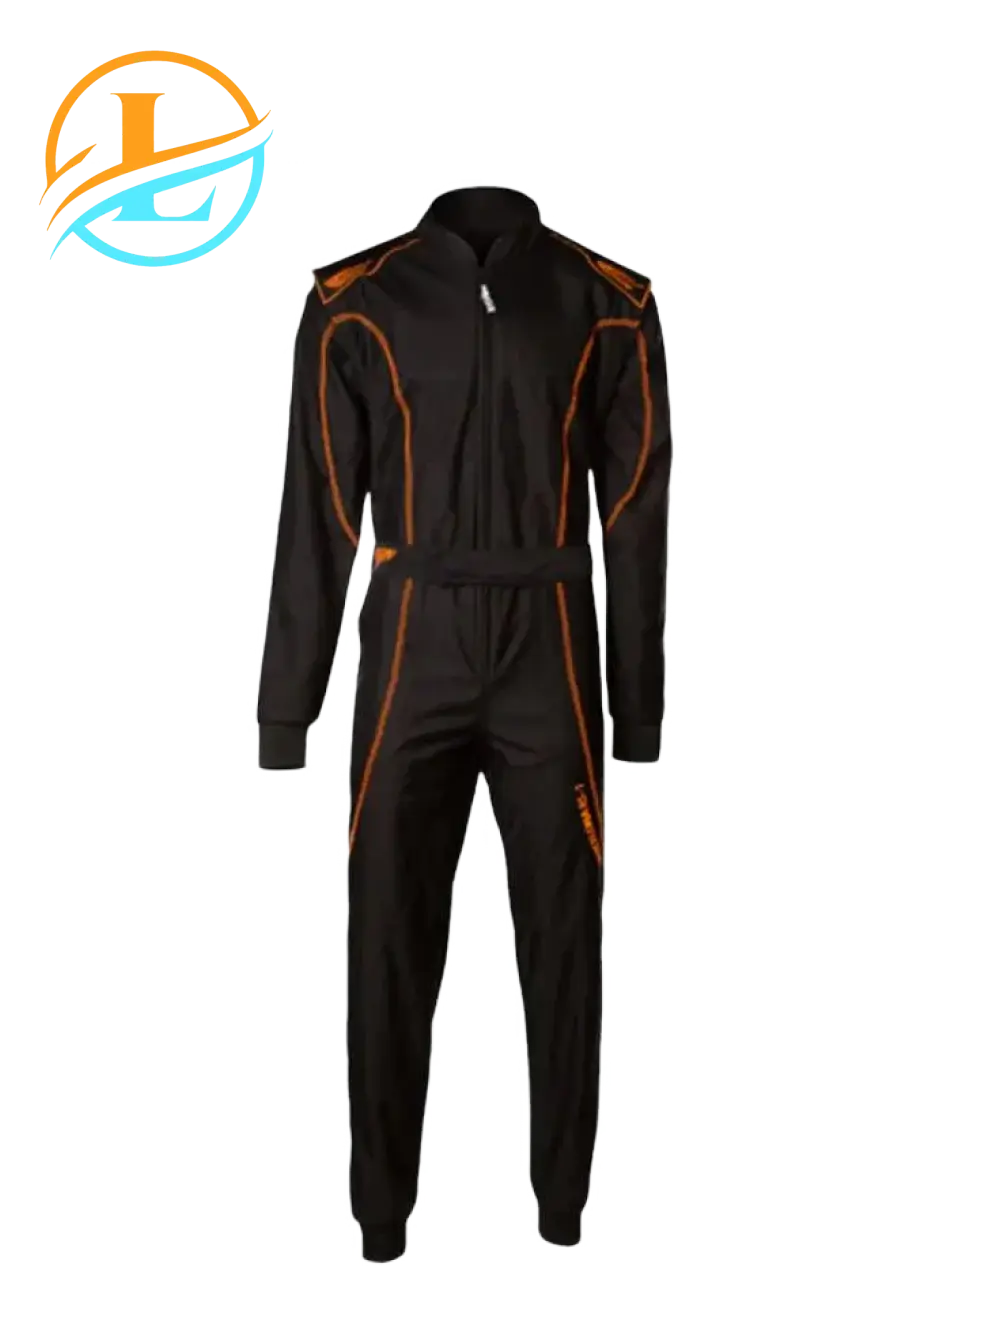 Speed LVL2 suit RS-1 Barcelona Lexmberg Racegears